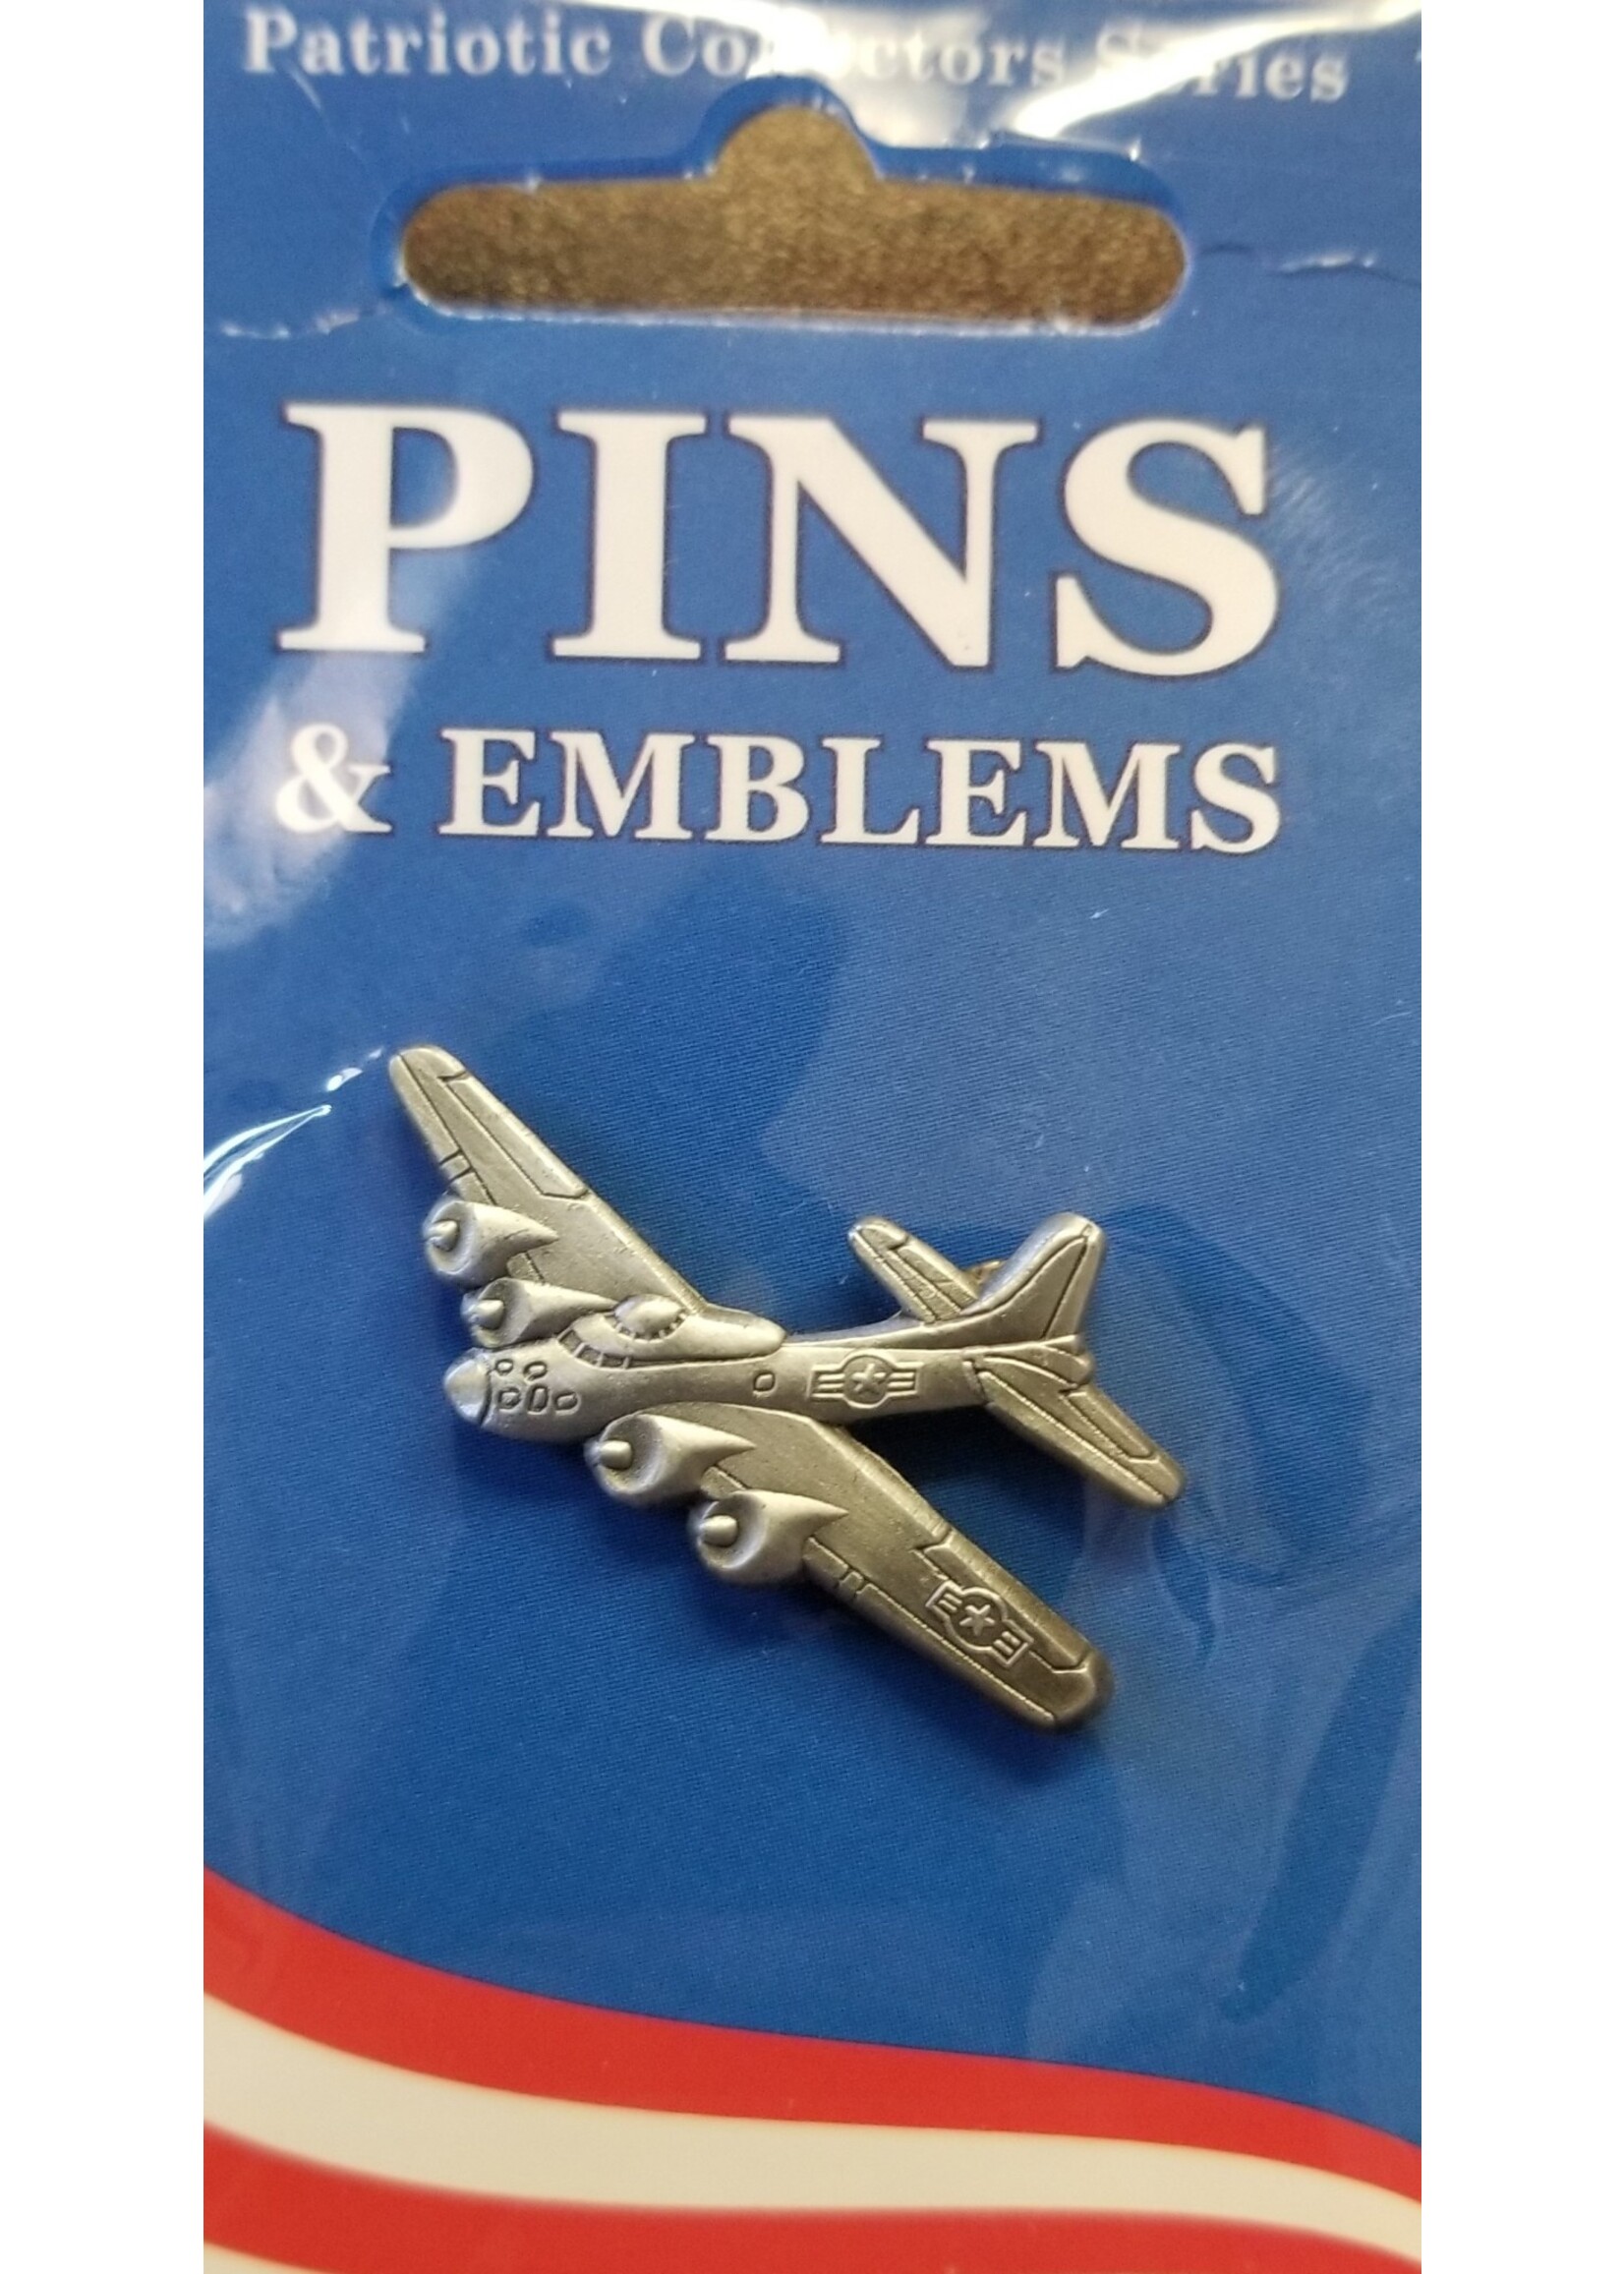 Eagle Emblems Pin B-17 Flying Fortress